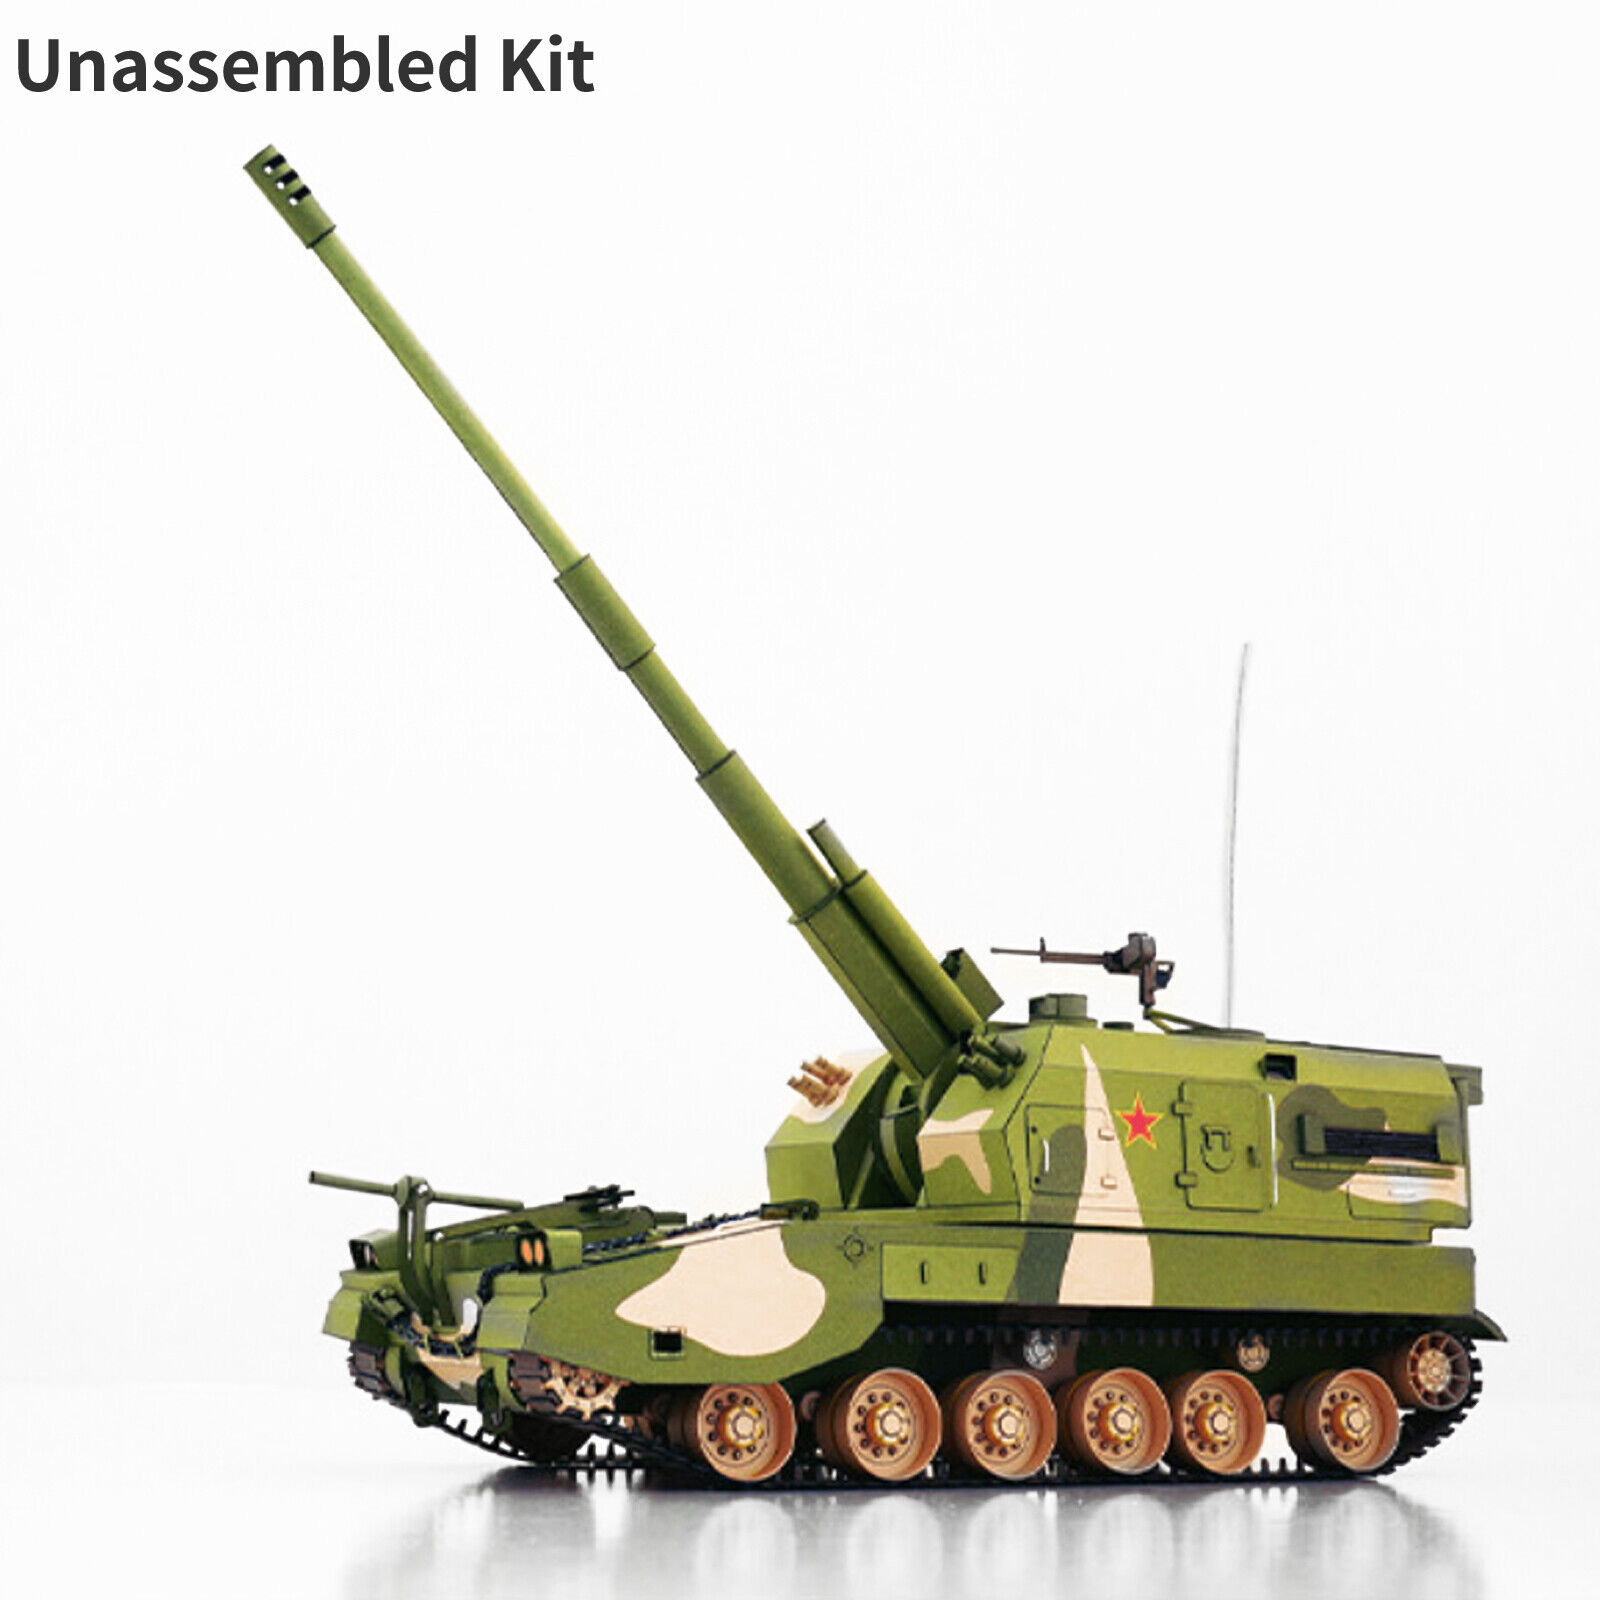 1:35 Unassembled China PLZ-05 Self-Propelled Howitzer Tank DIY Paper Model